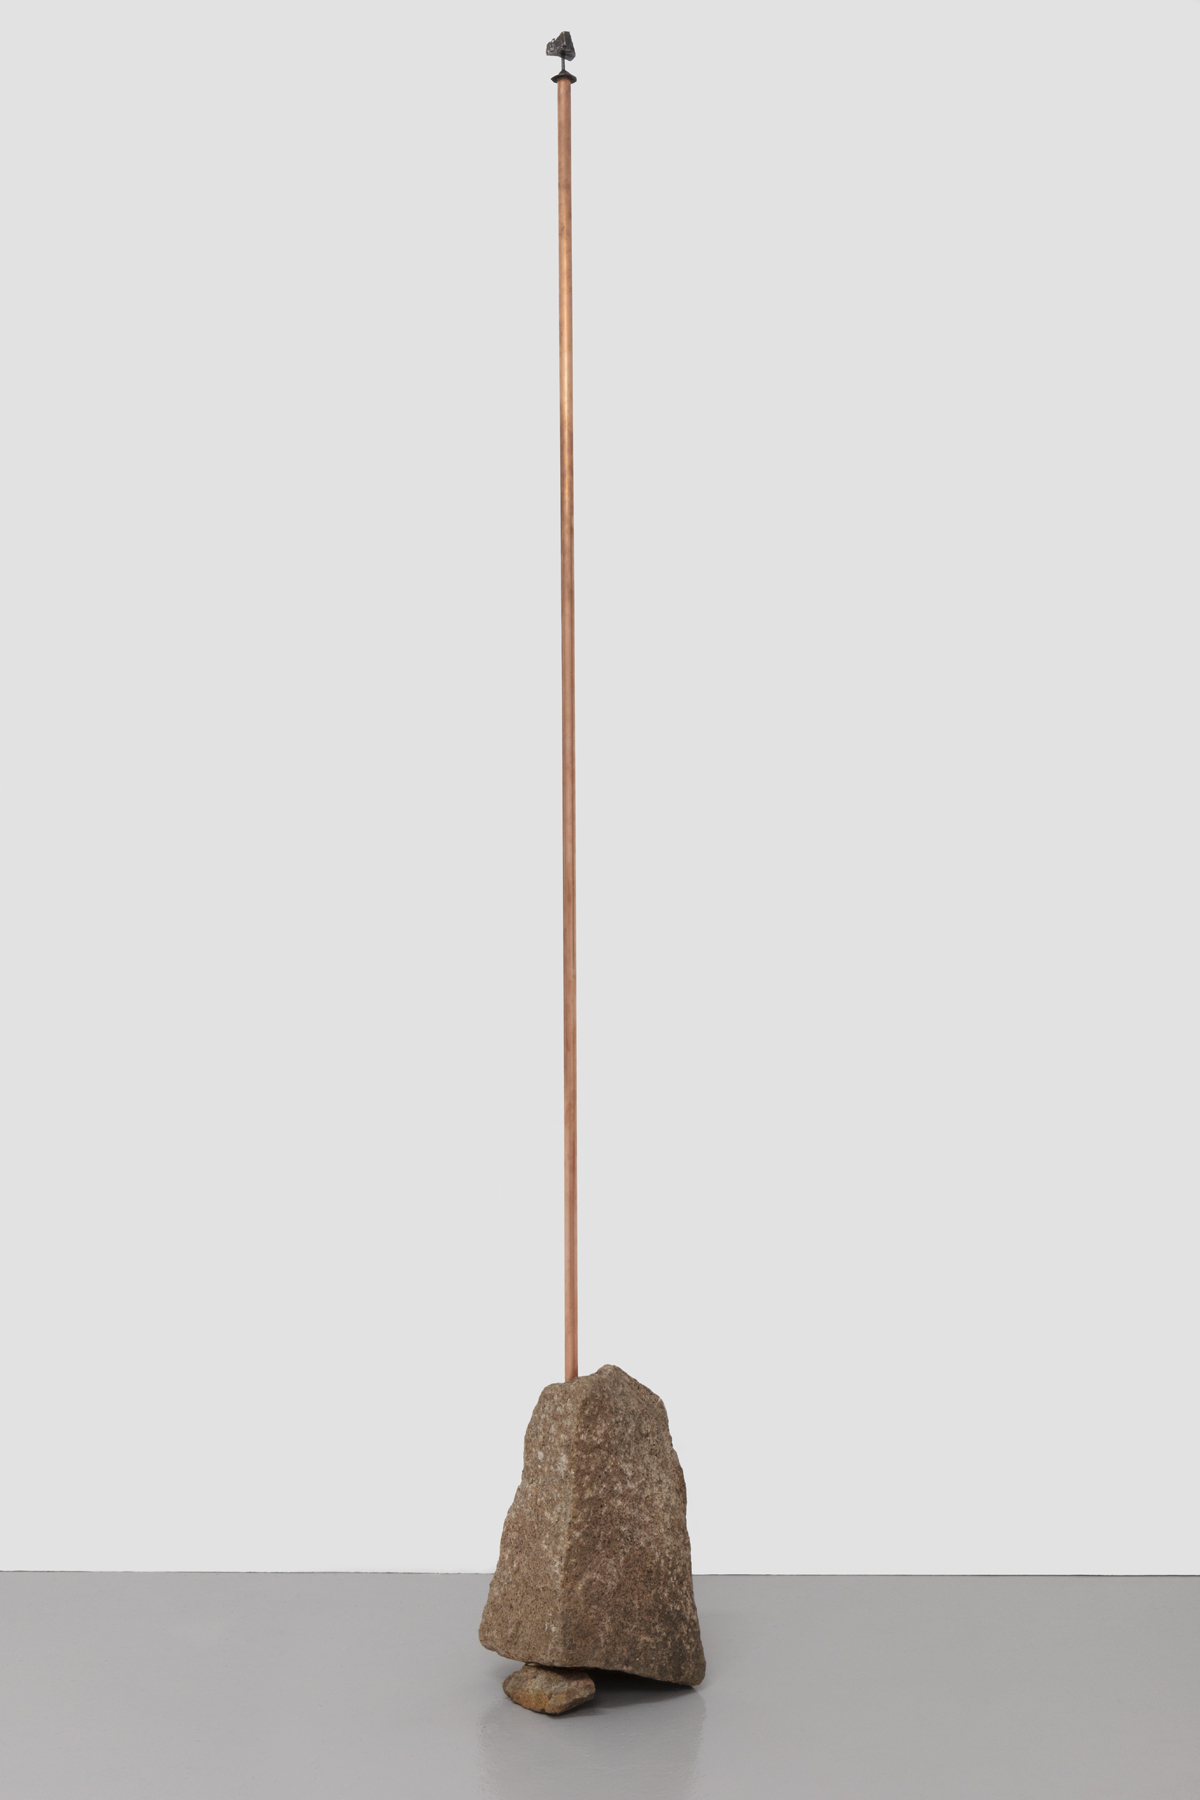 Berget /The Montain, 2020	
Copper, granite, sterling silver 925
183 cm, basen: ca 20 x 20 cm
